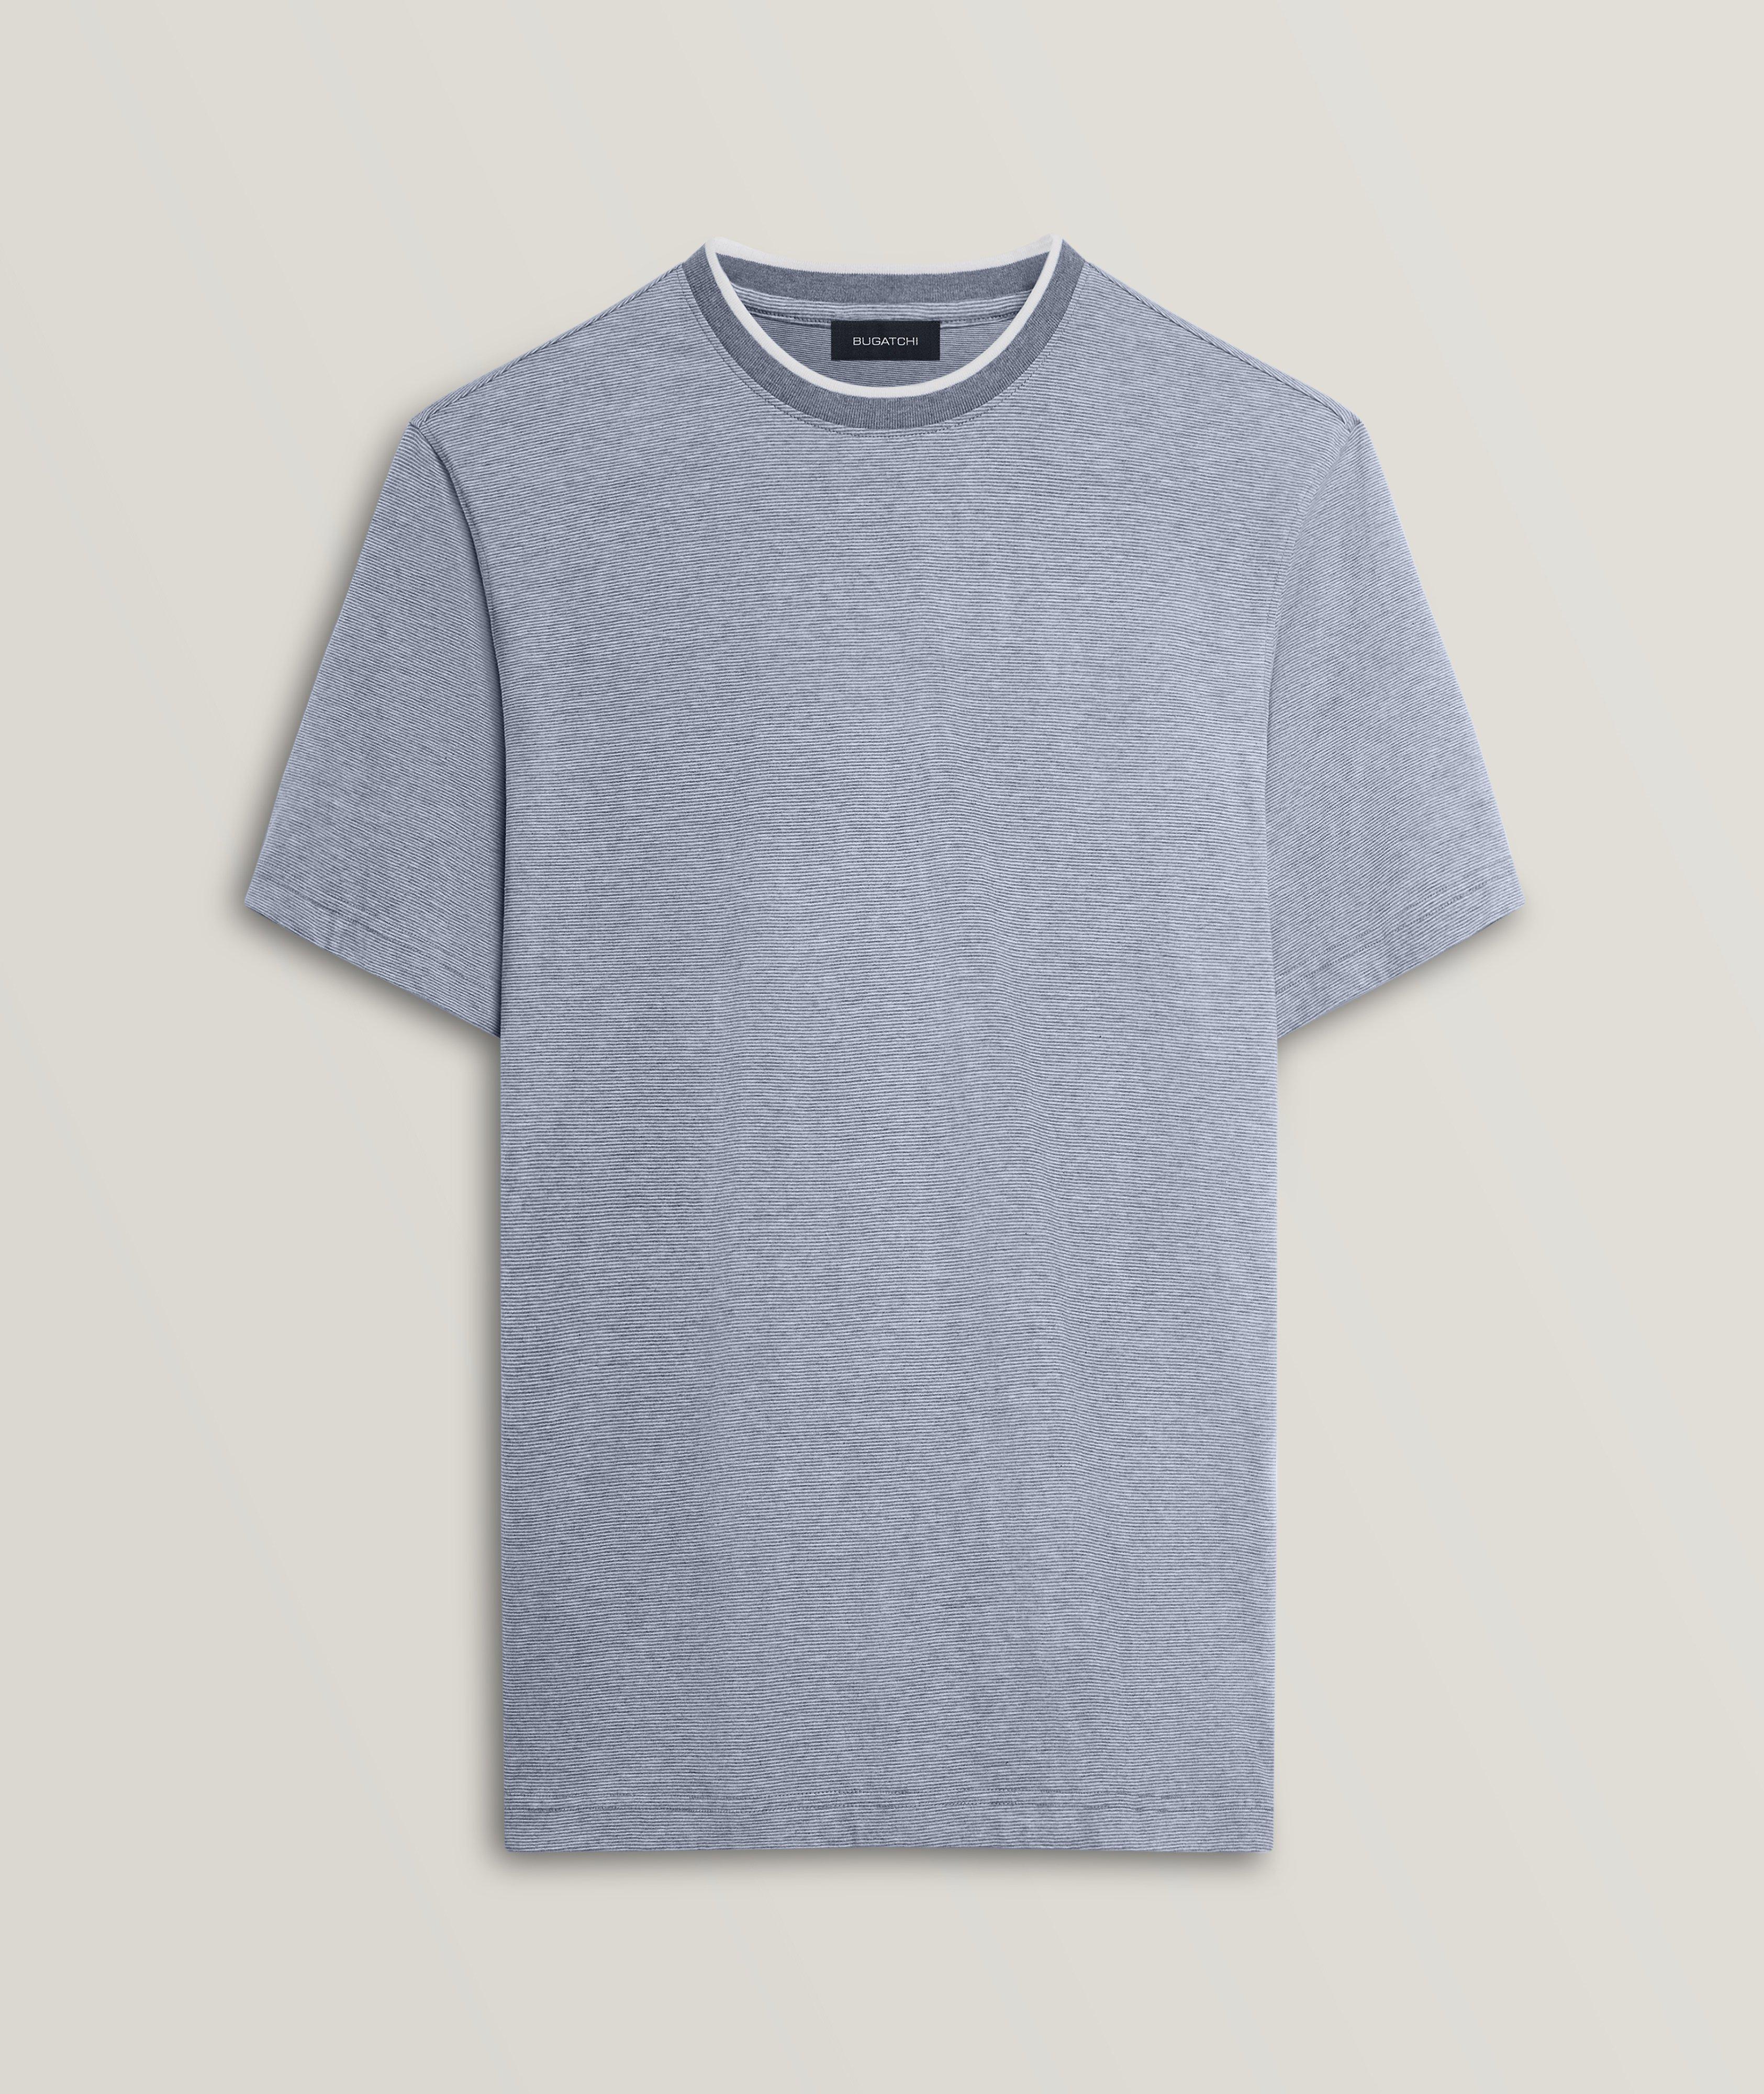 Pinstripe Cotton T-Shirt image 0